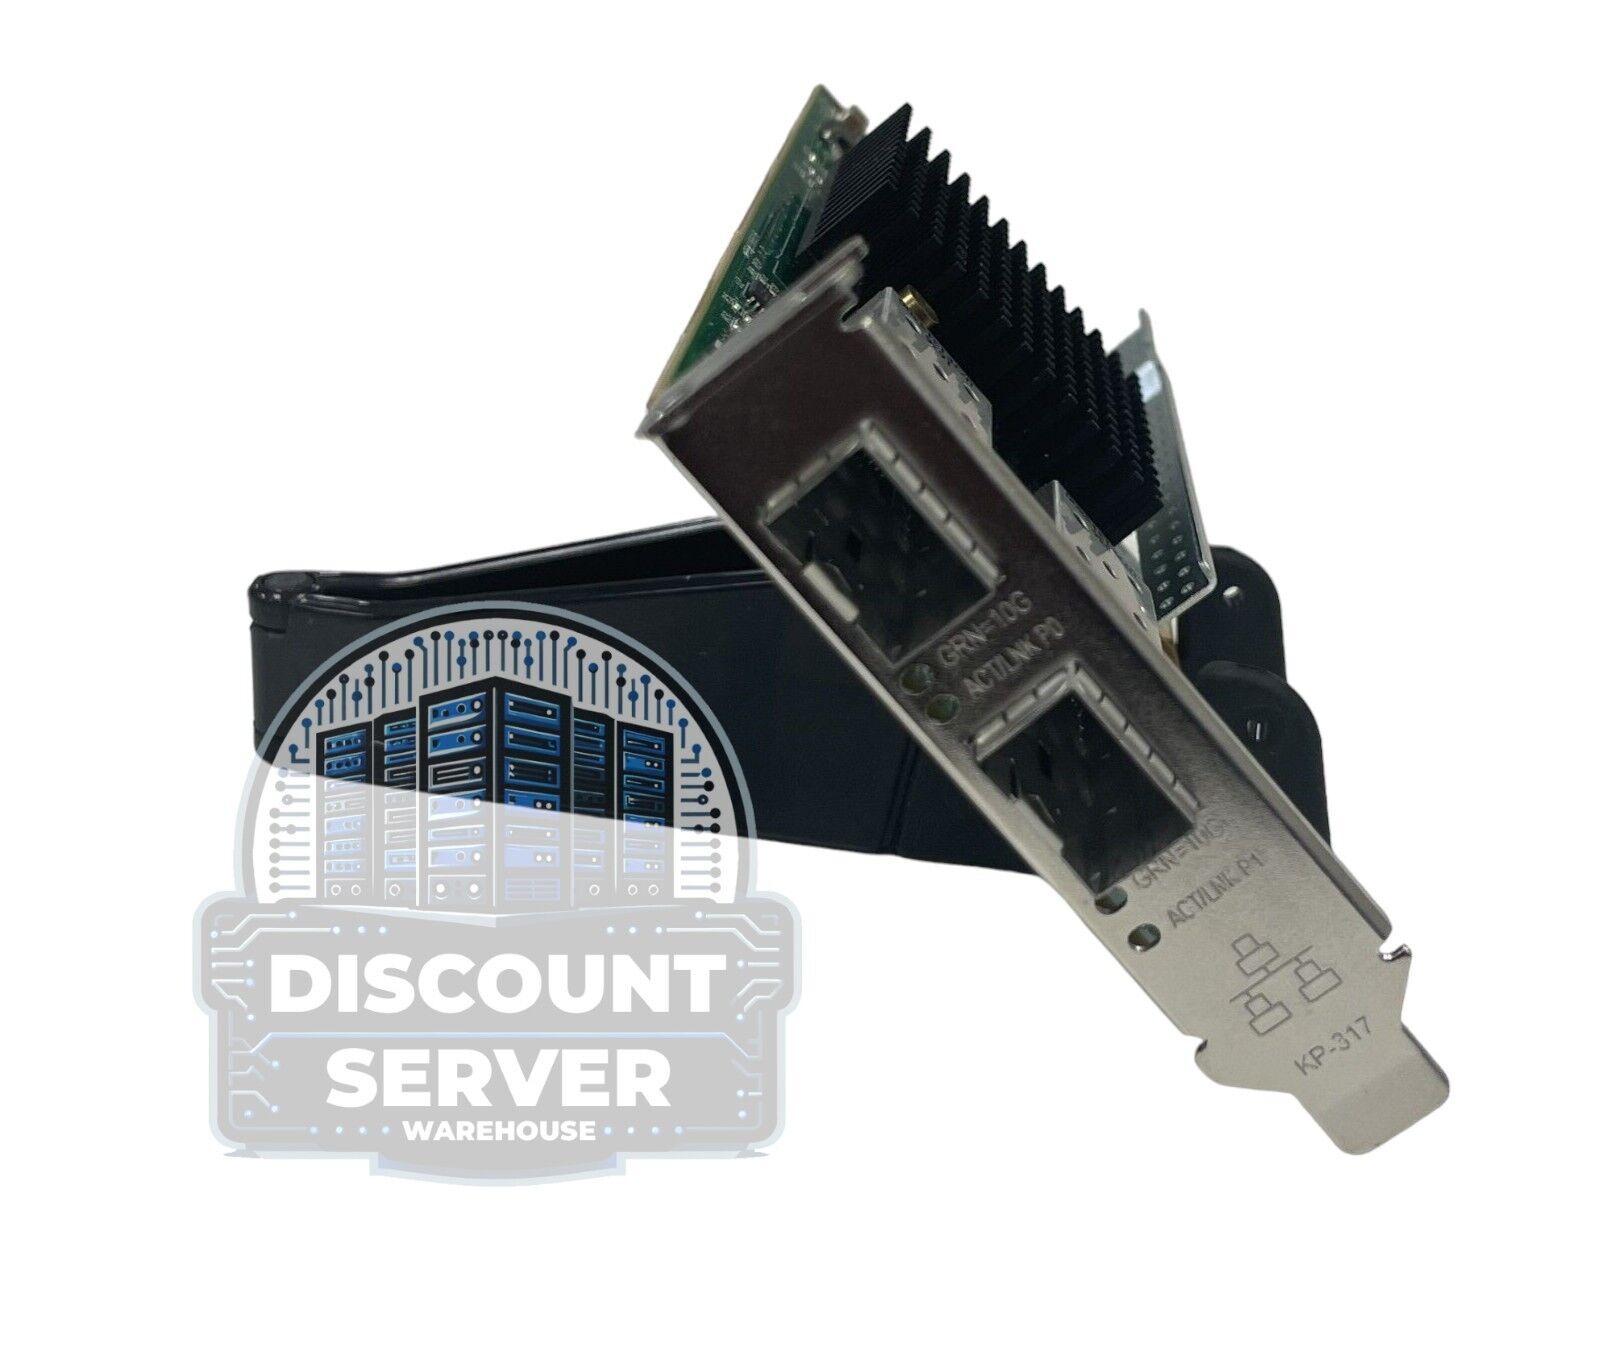 Silicom (PE210G2SPI9A-XR) 10Gb Dual Port SFP+ PCIe Ethernet Adapter Low Profile